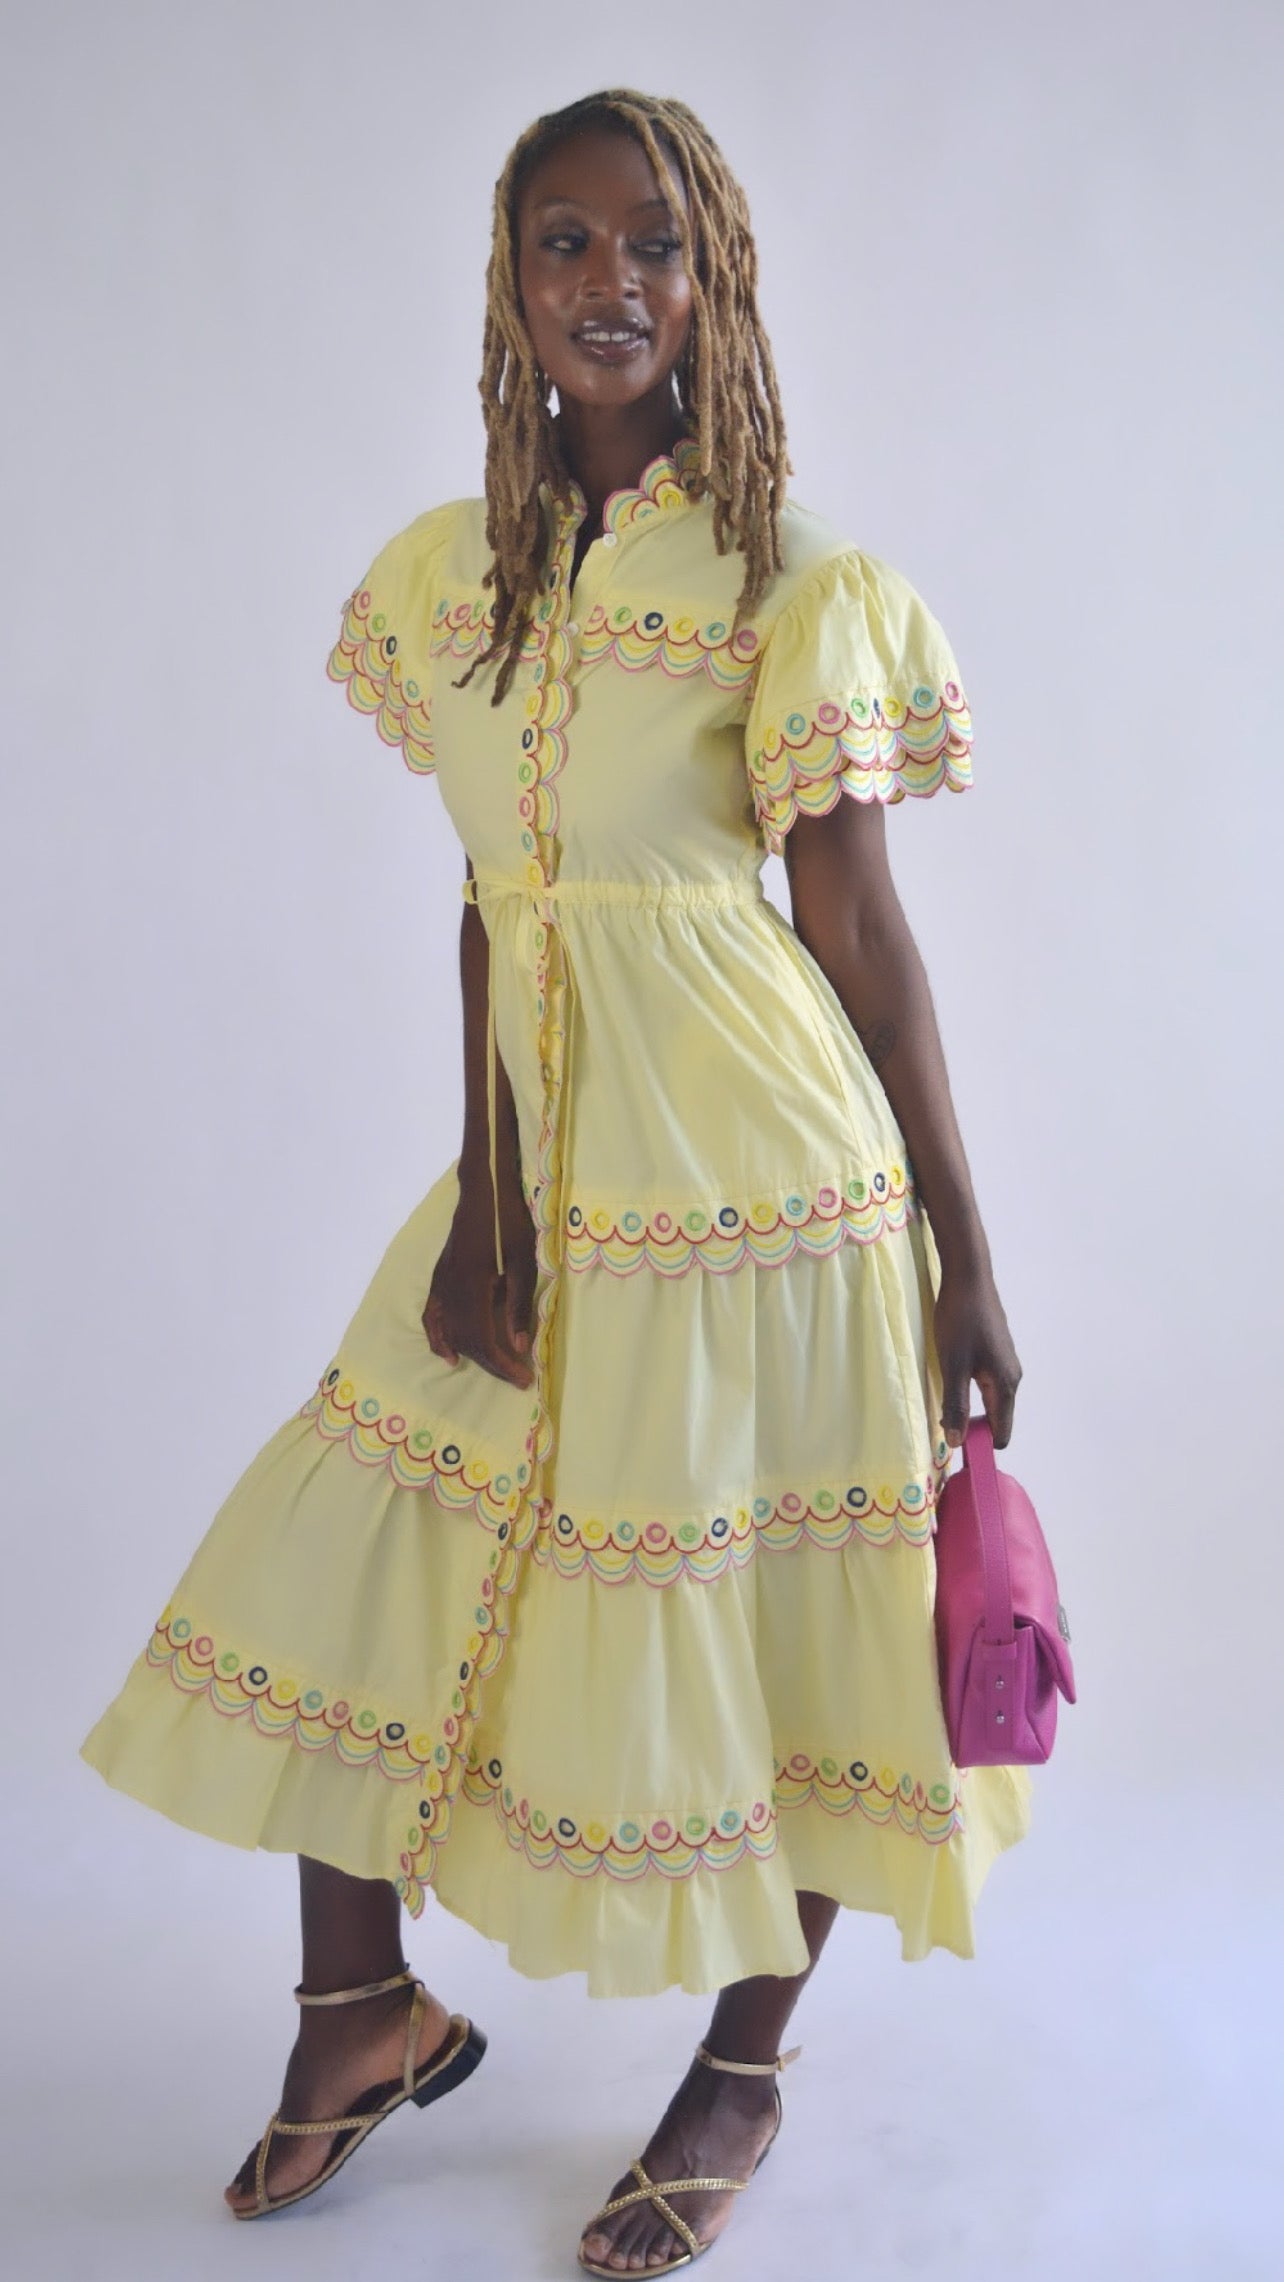 Celia B- Alvis Dress in Yellow